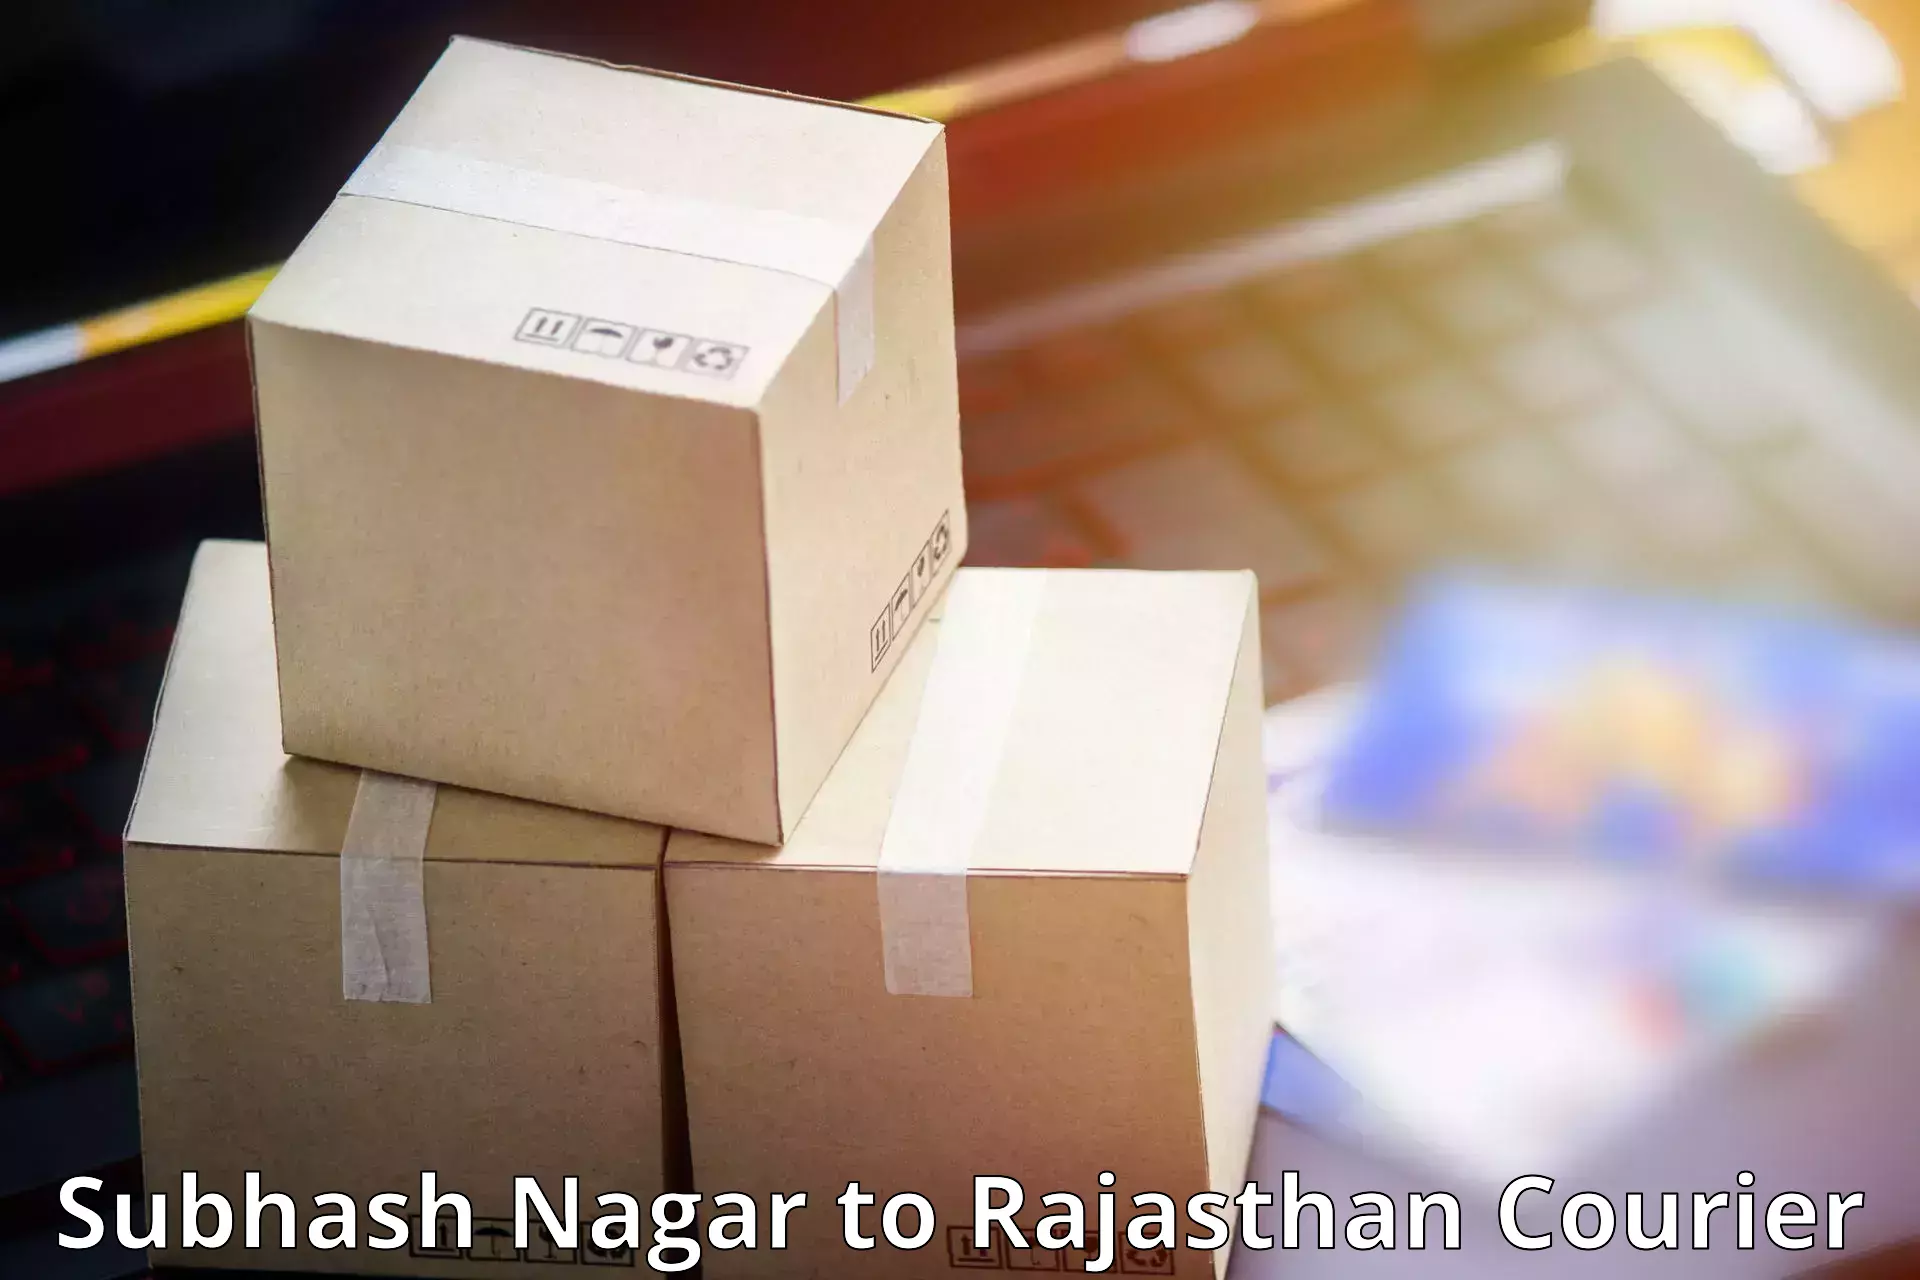 Courier app Subhash Nagar to Bhinder